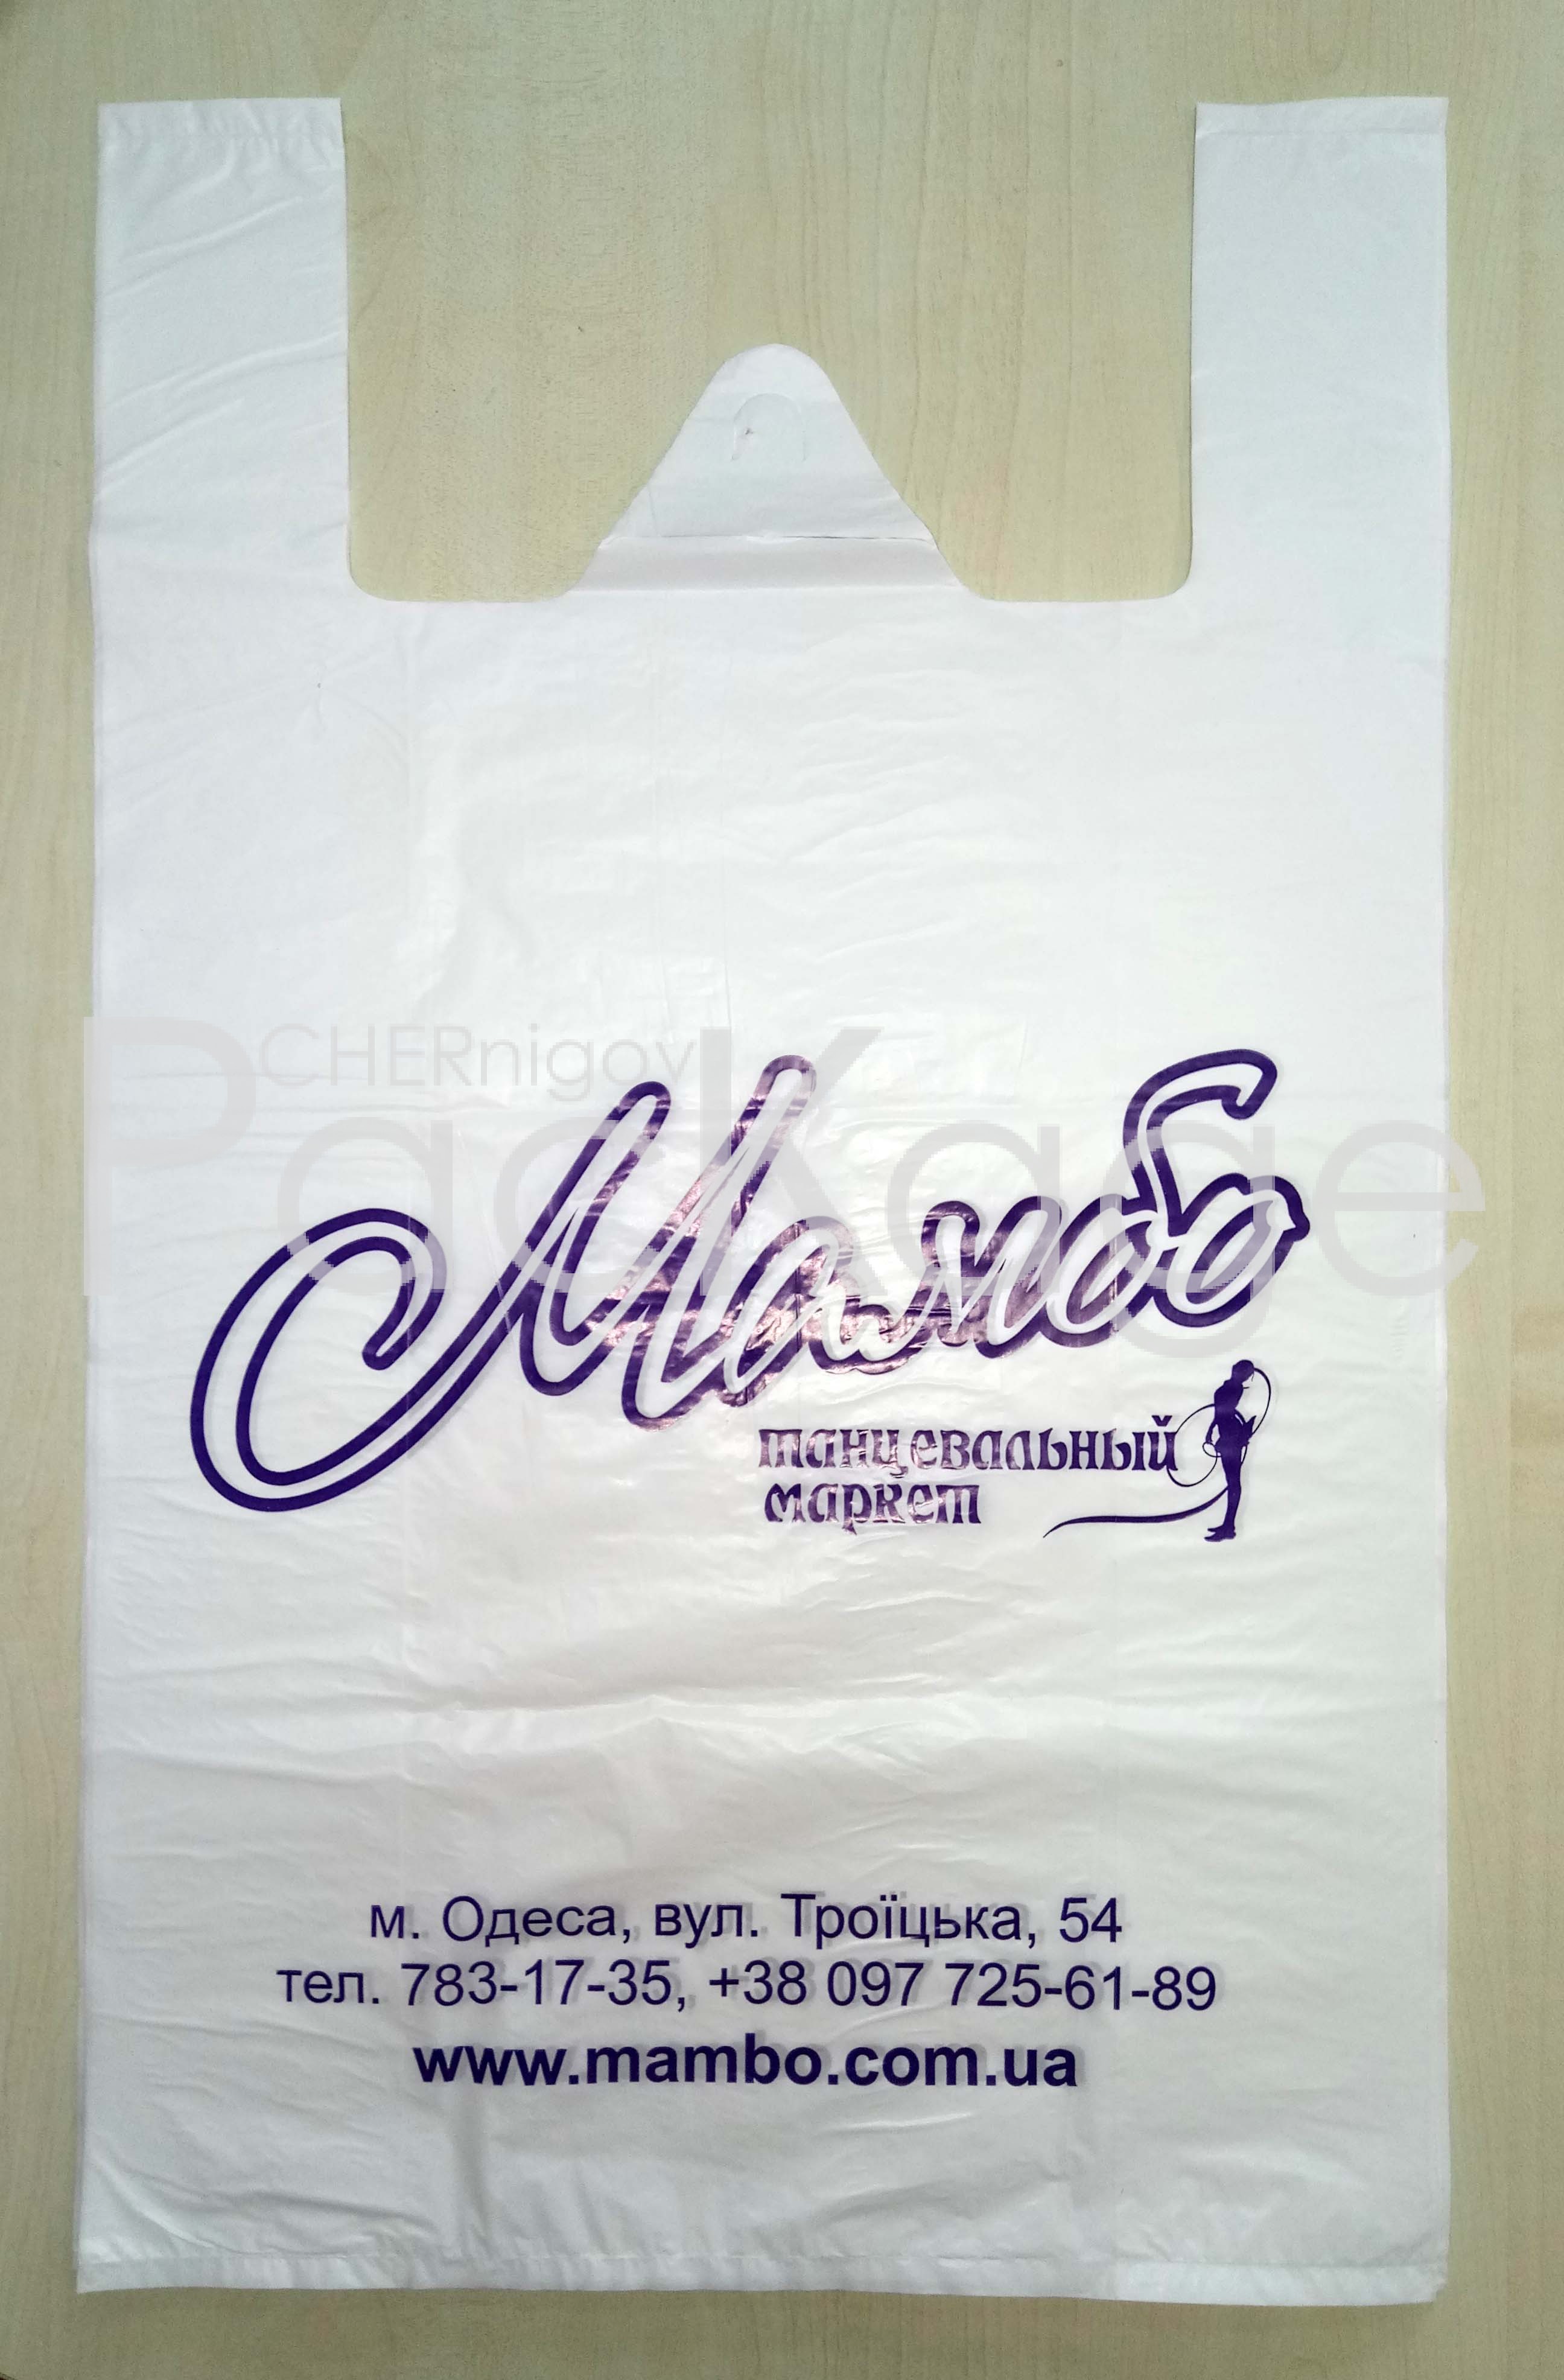 Какие выбрать пакеты майка для магазина Chernigov Package - Photo P70310-103726